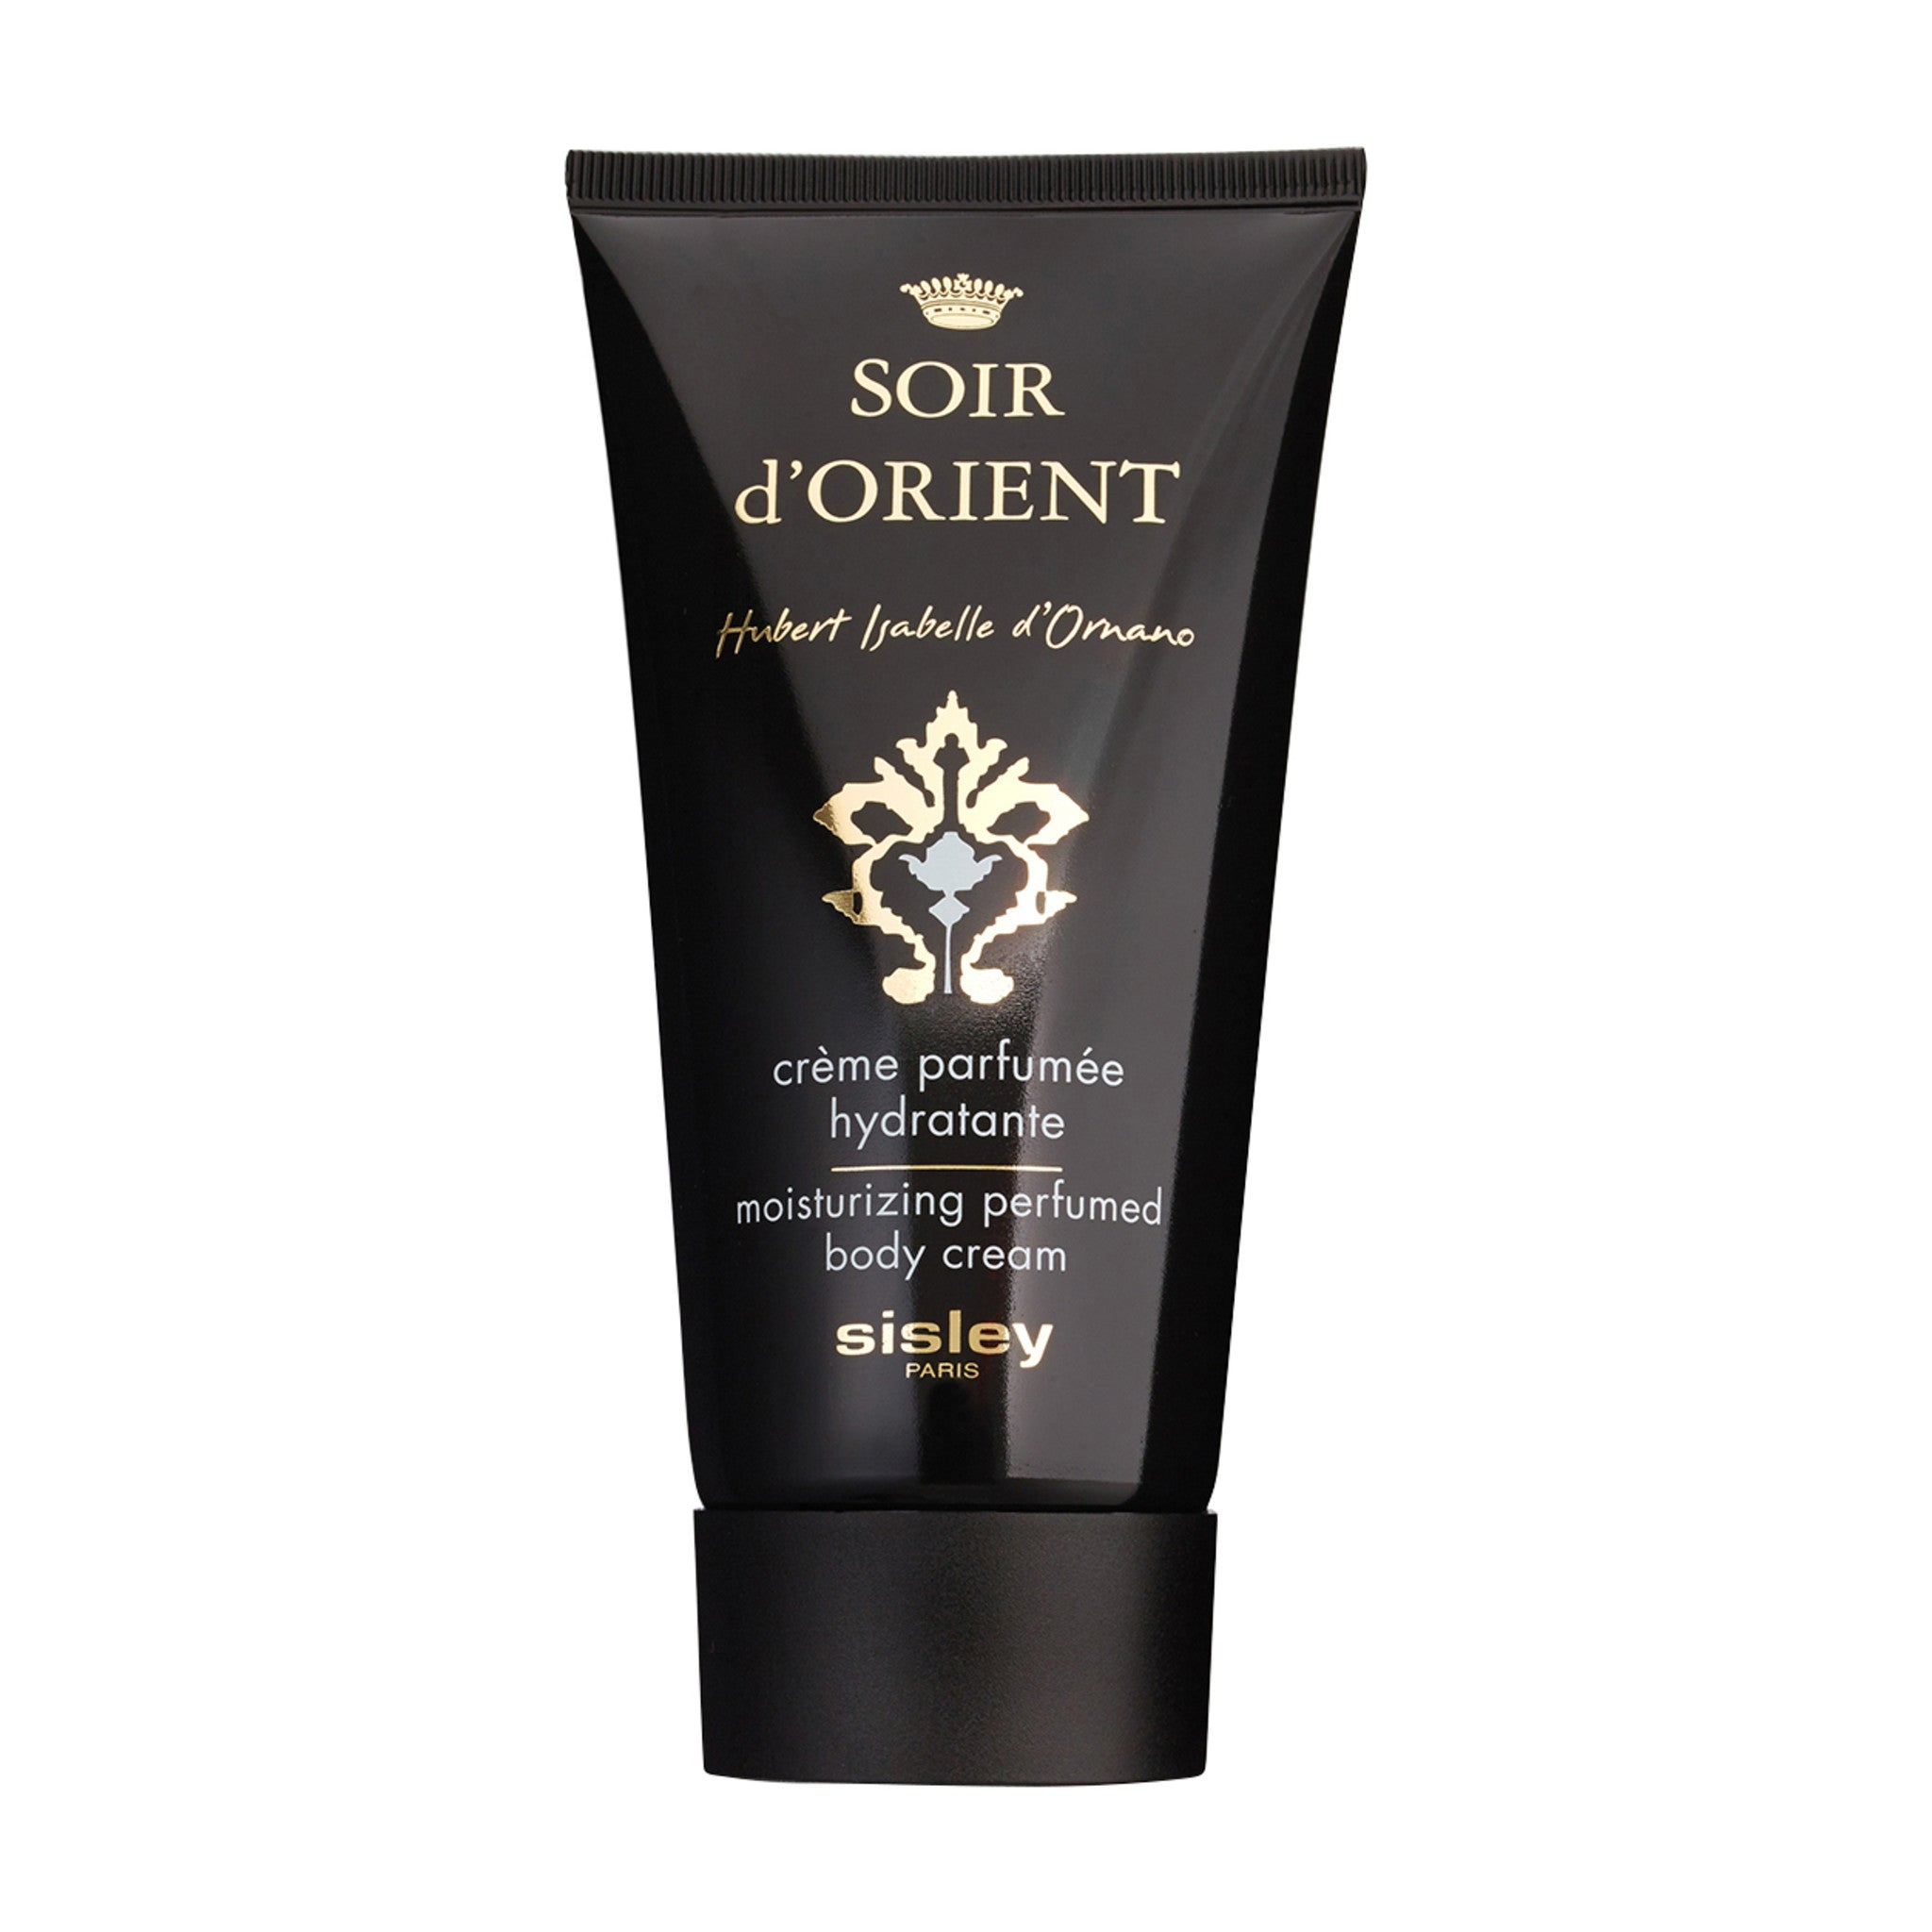 Sisley-Paris Soir d'Orient Moisturizing Perfumed Body Cream main image.